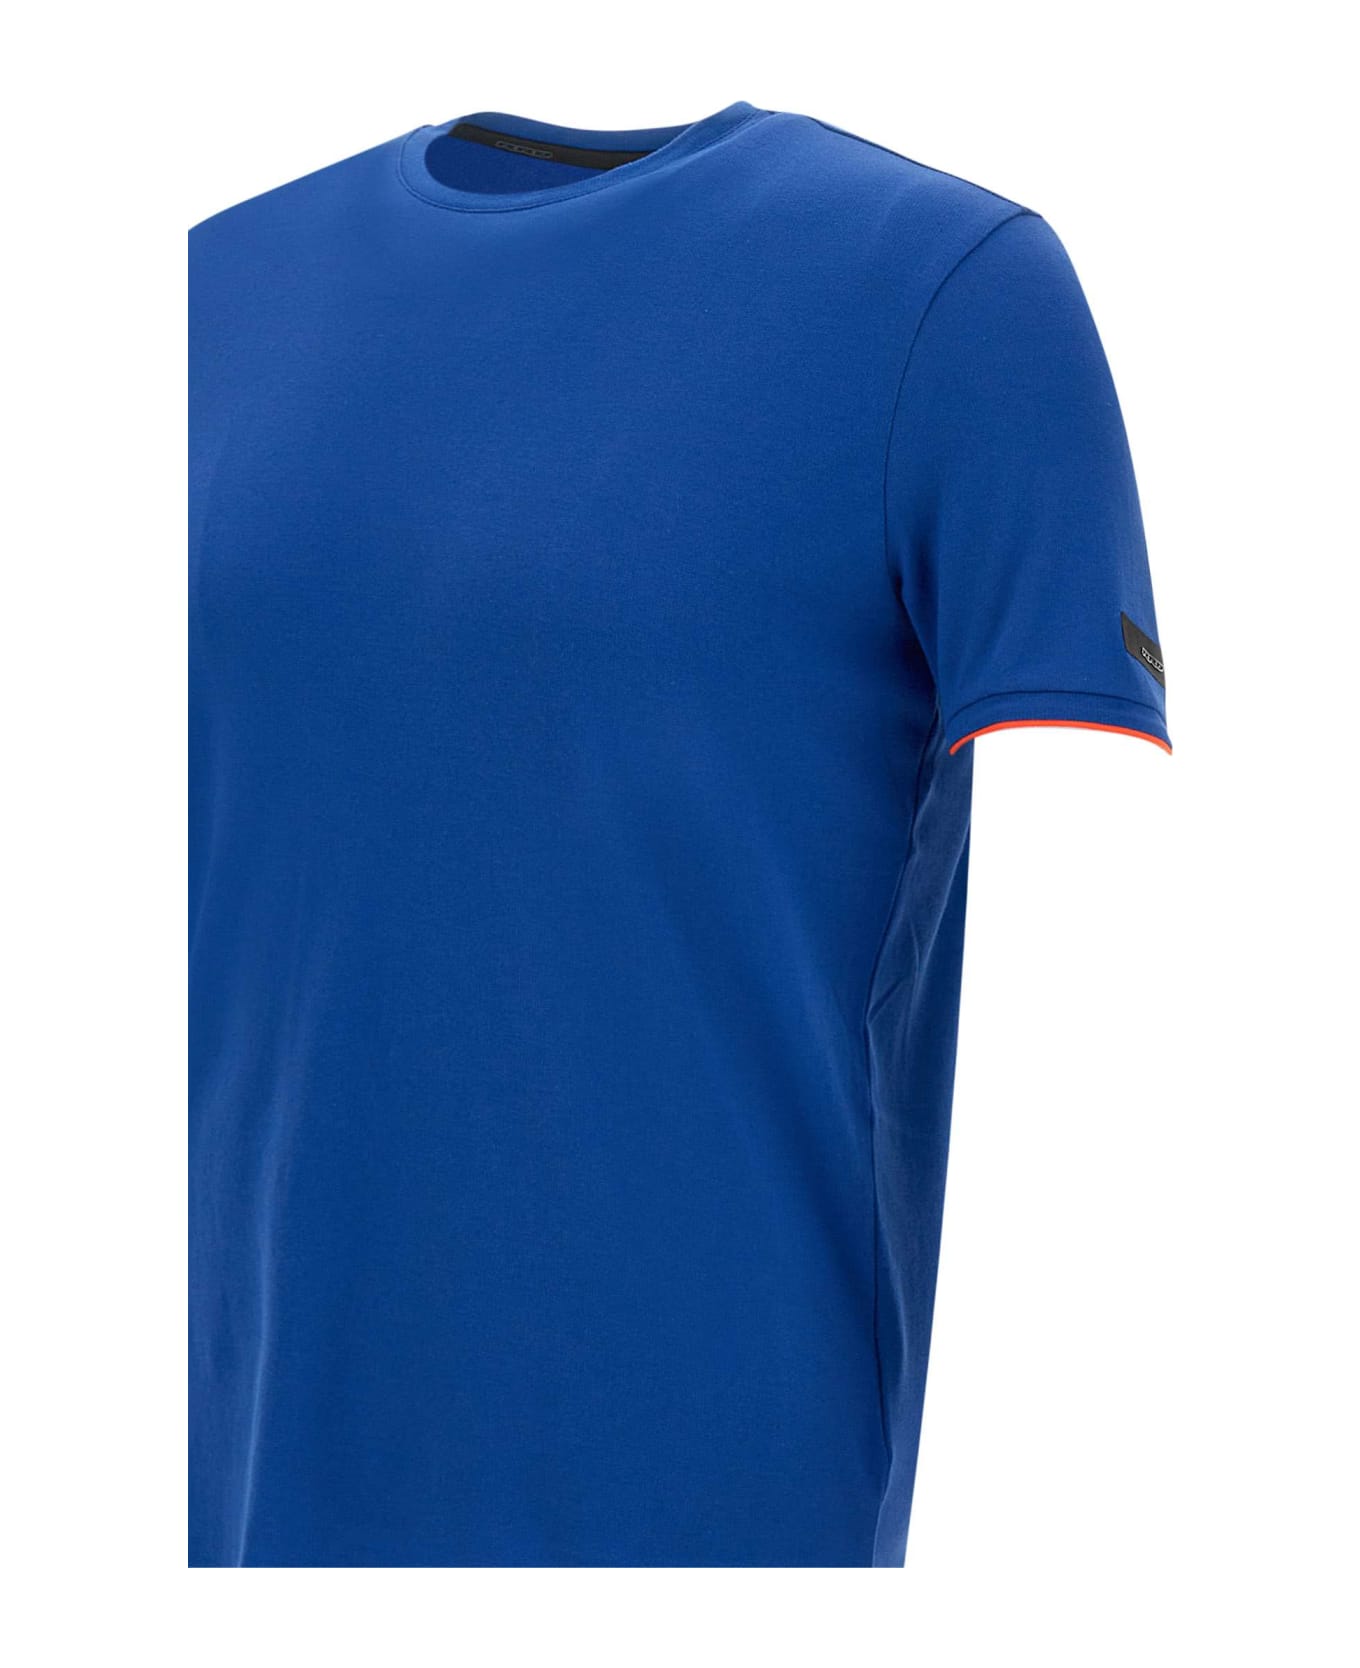 RRD - Roberto Ricci Design 'shirty Macro' T-shirt - Blu New Royal シャツ